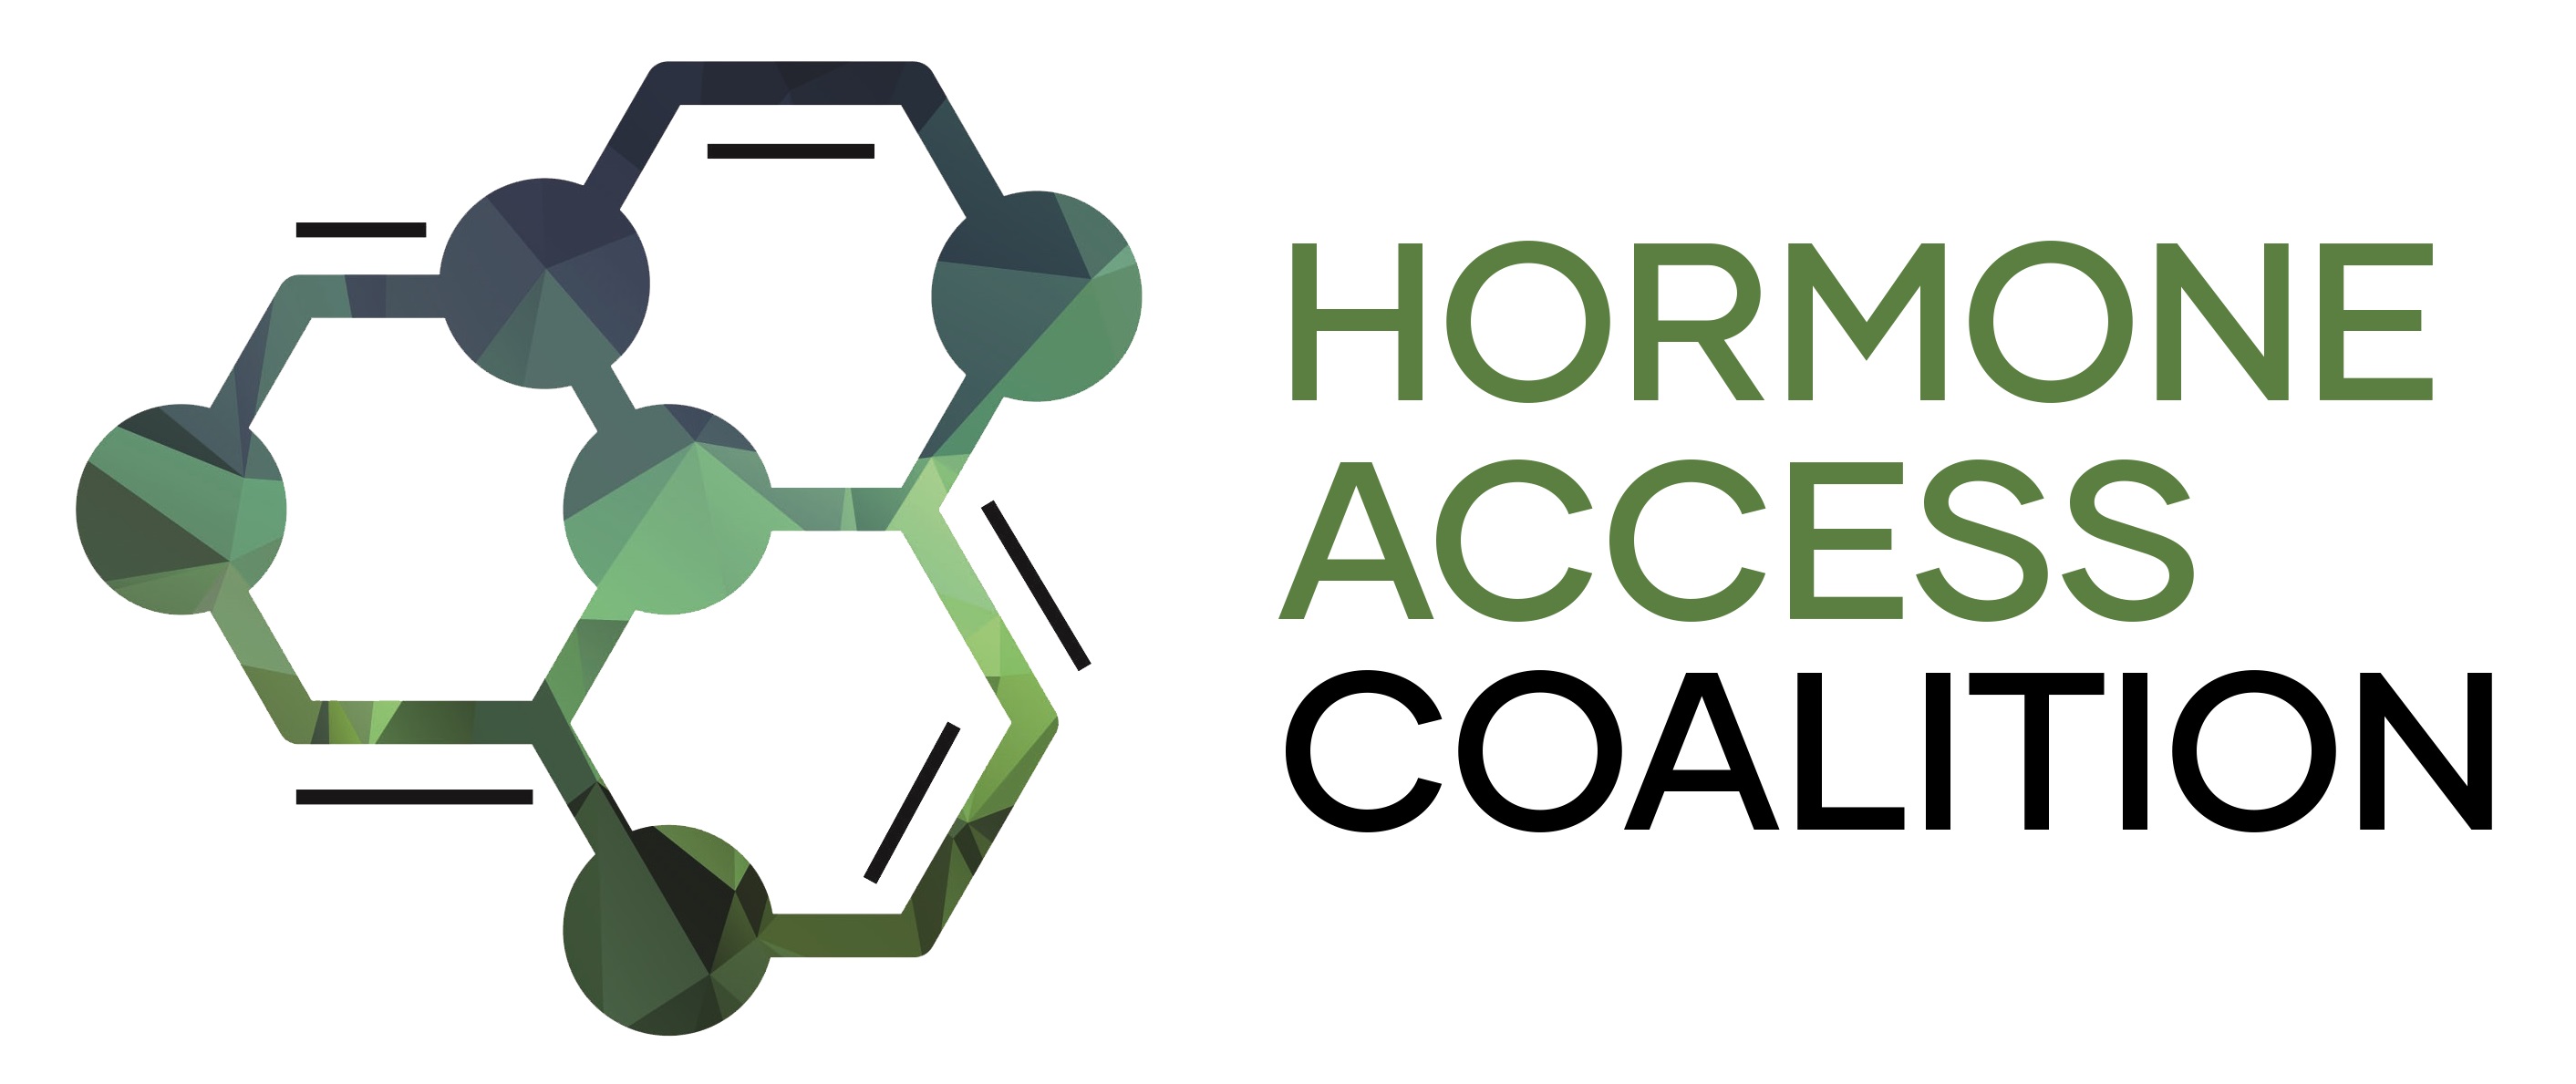 hormone access coalition logo cropped.jpg